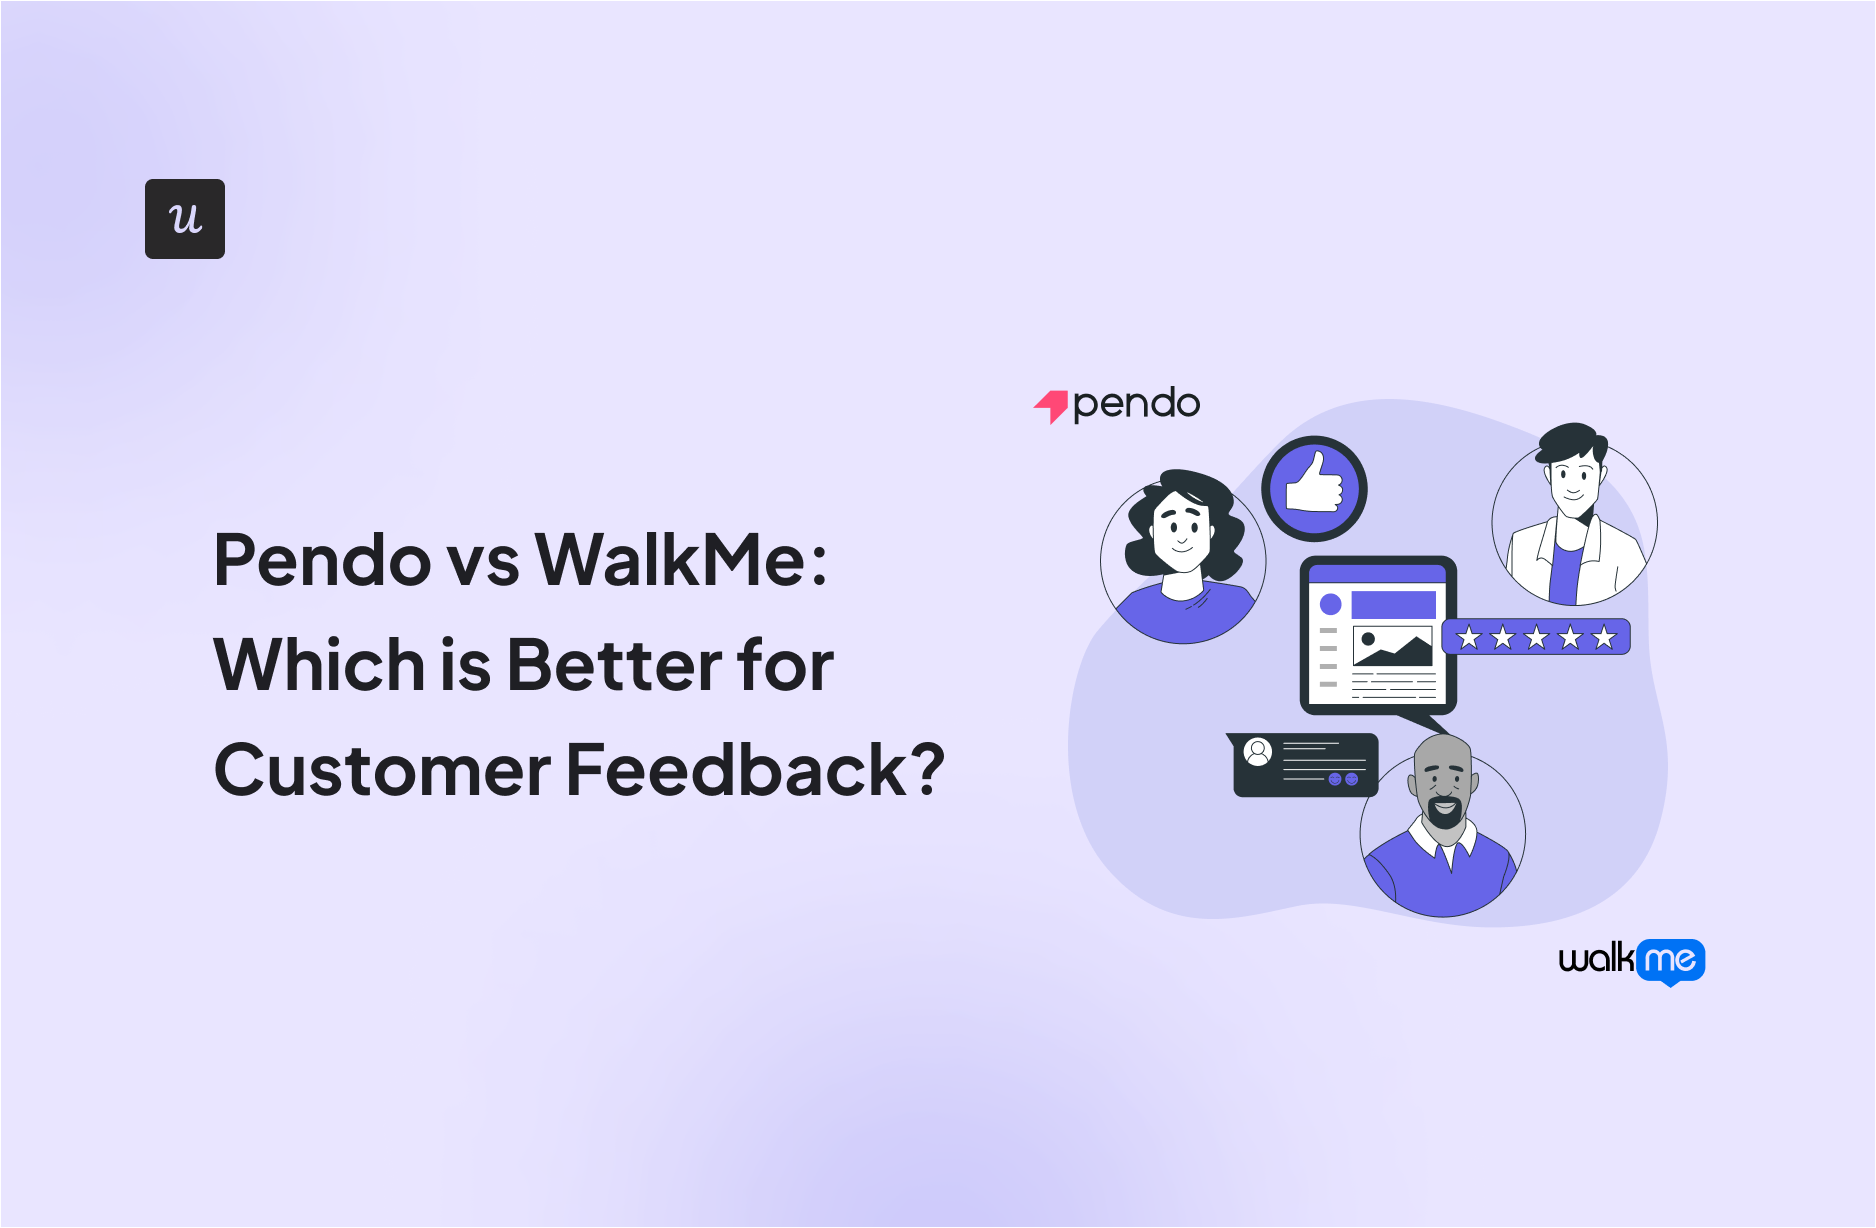 Pendo vs WalkMe: Which is Better for Customer Feedback?